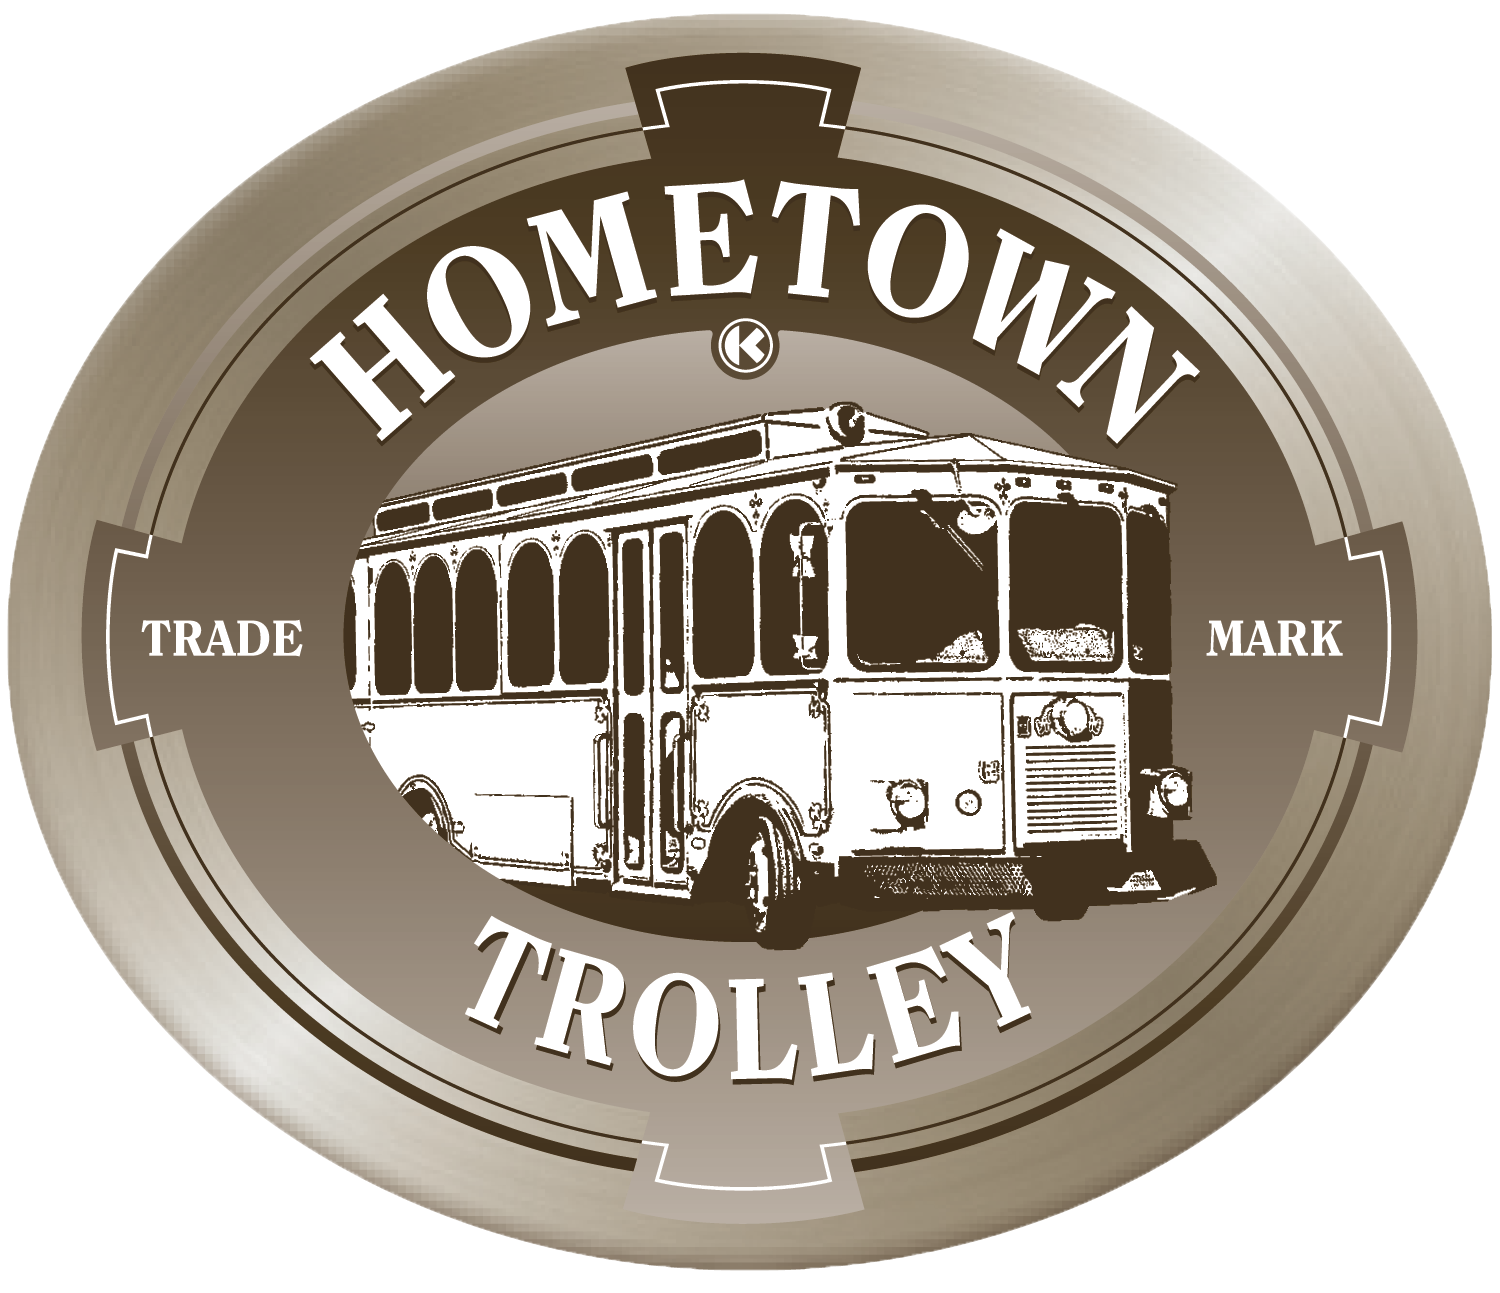 Hometown Trolley Logo